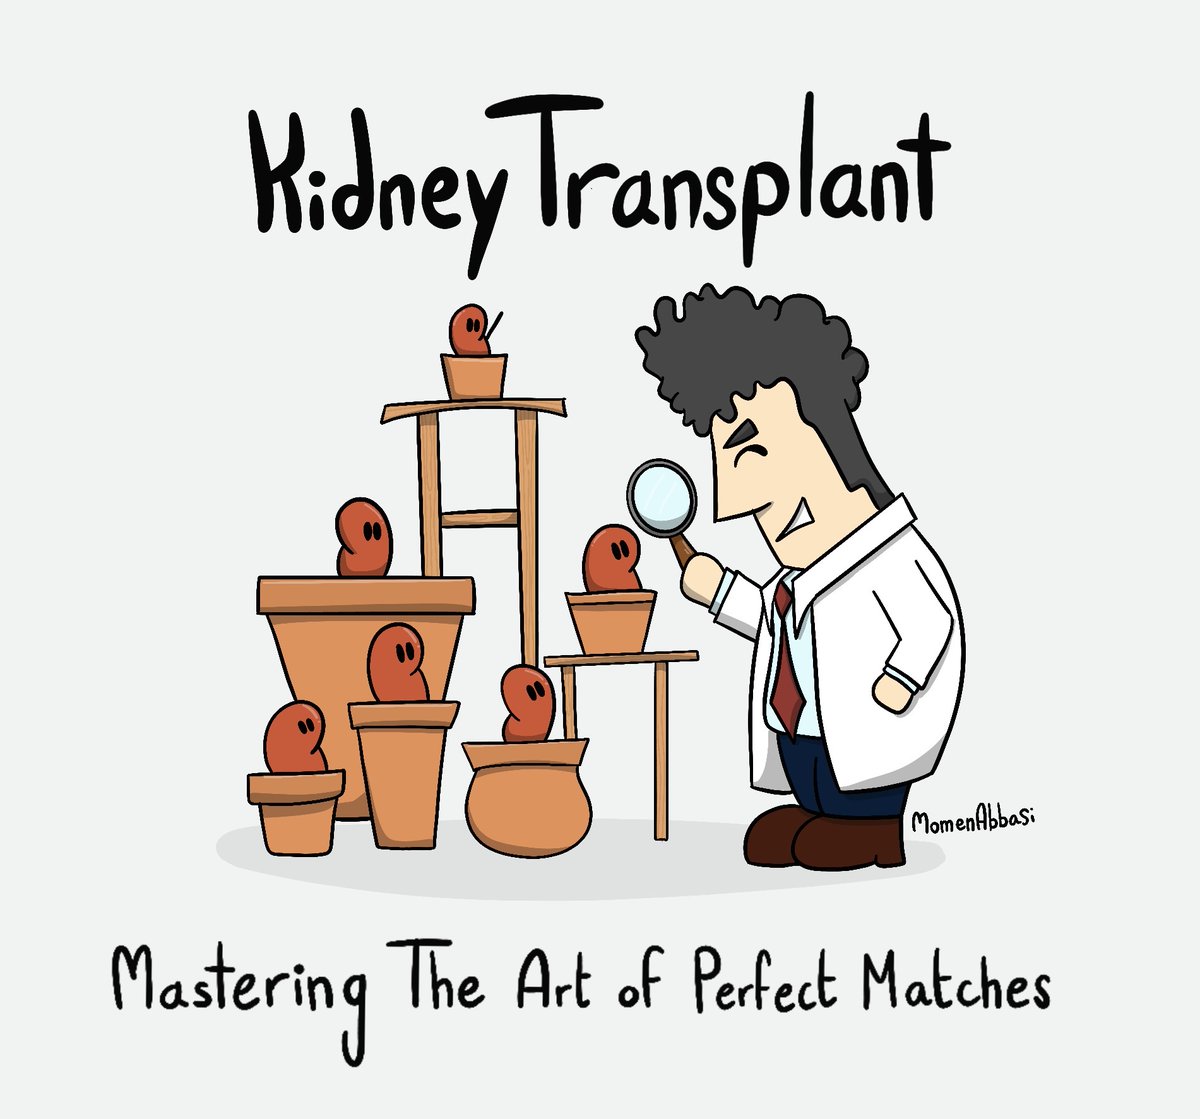 Match Making at its Finest ! #Kidney #transplant #Transplantation #KidneyTransplant #MedTwitter #Nephrology #NephTwitter #Comics #KidneyComics #medicalstudent